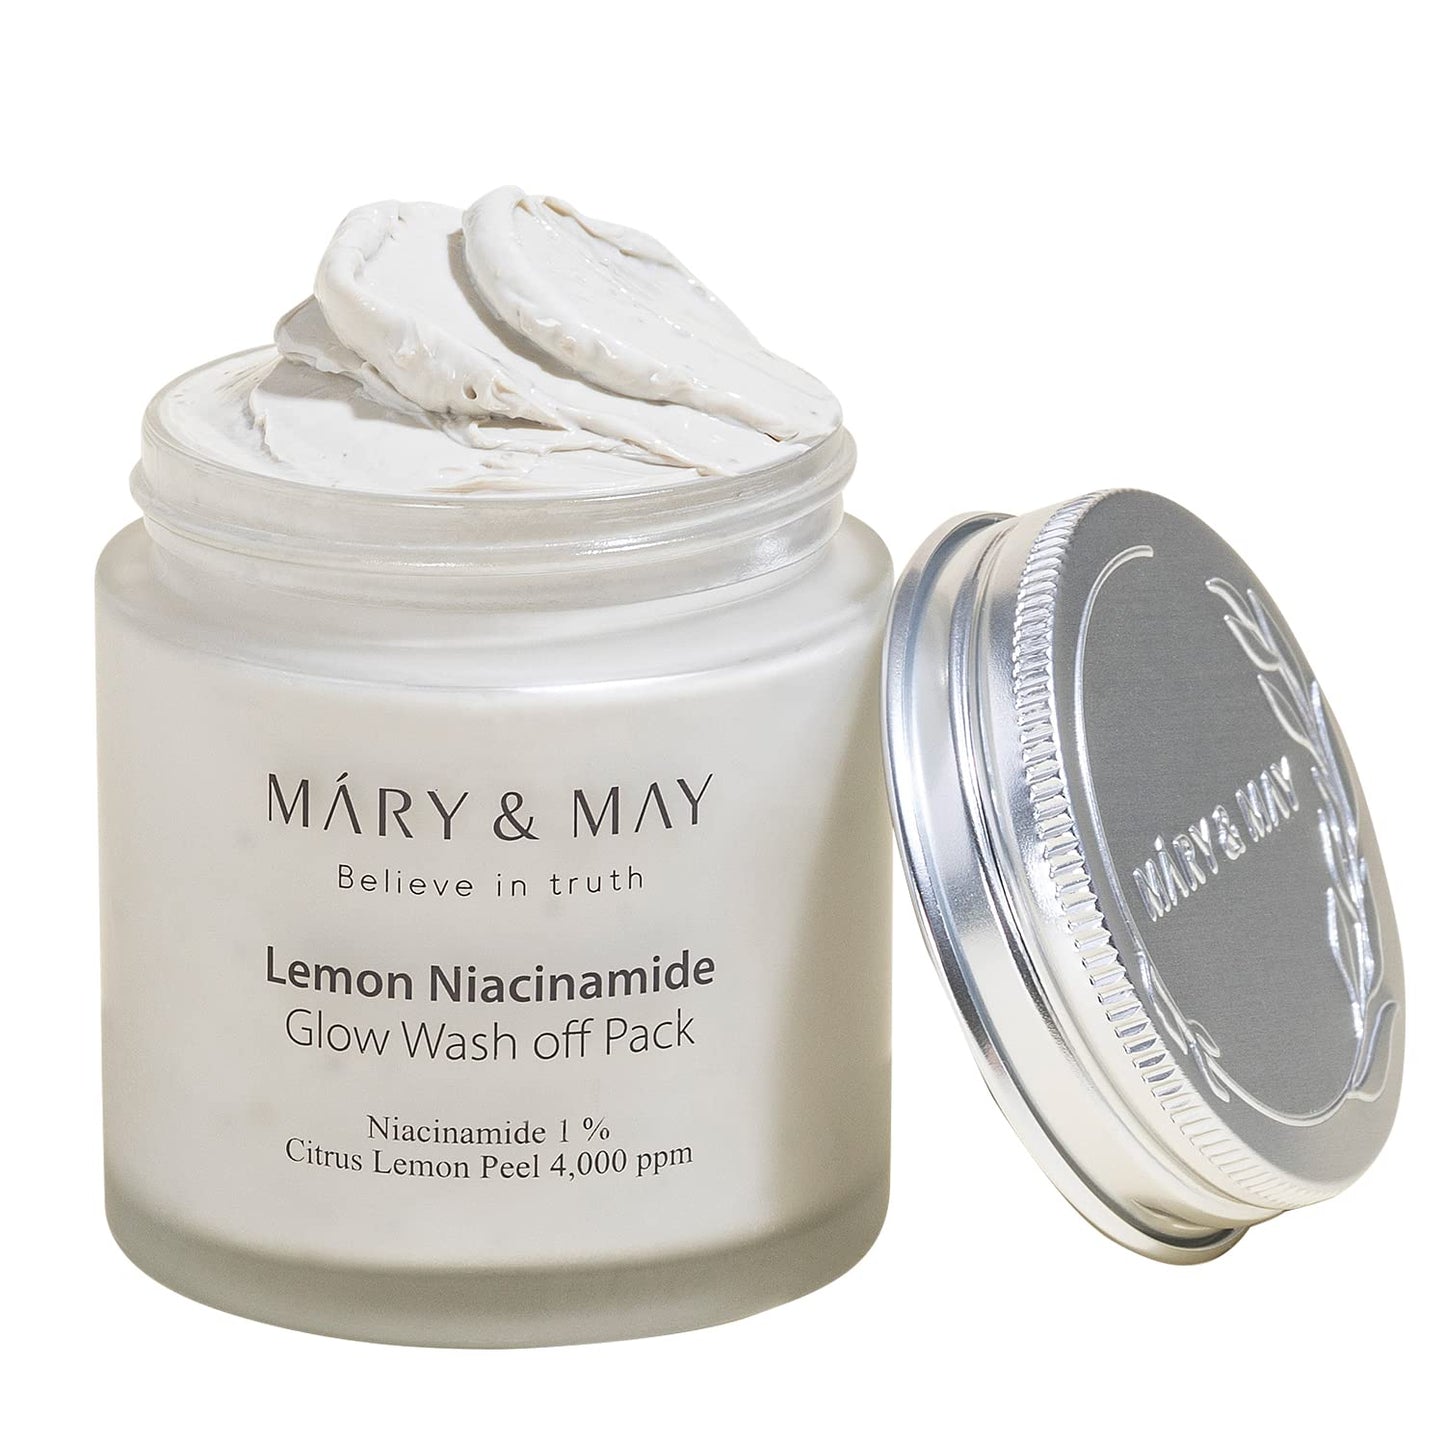 Mary & May Lemon Niacinamide Glow Wash Off Pack 125g